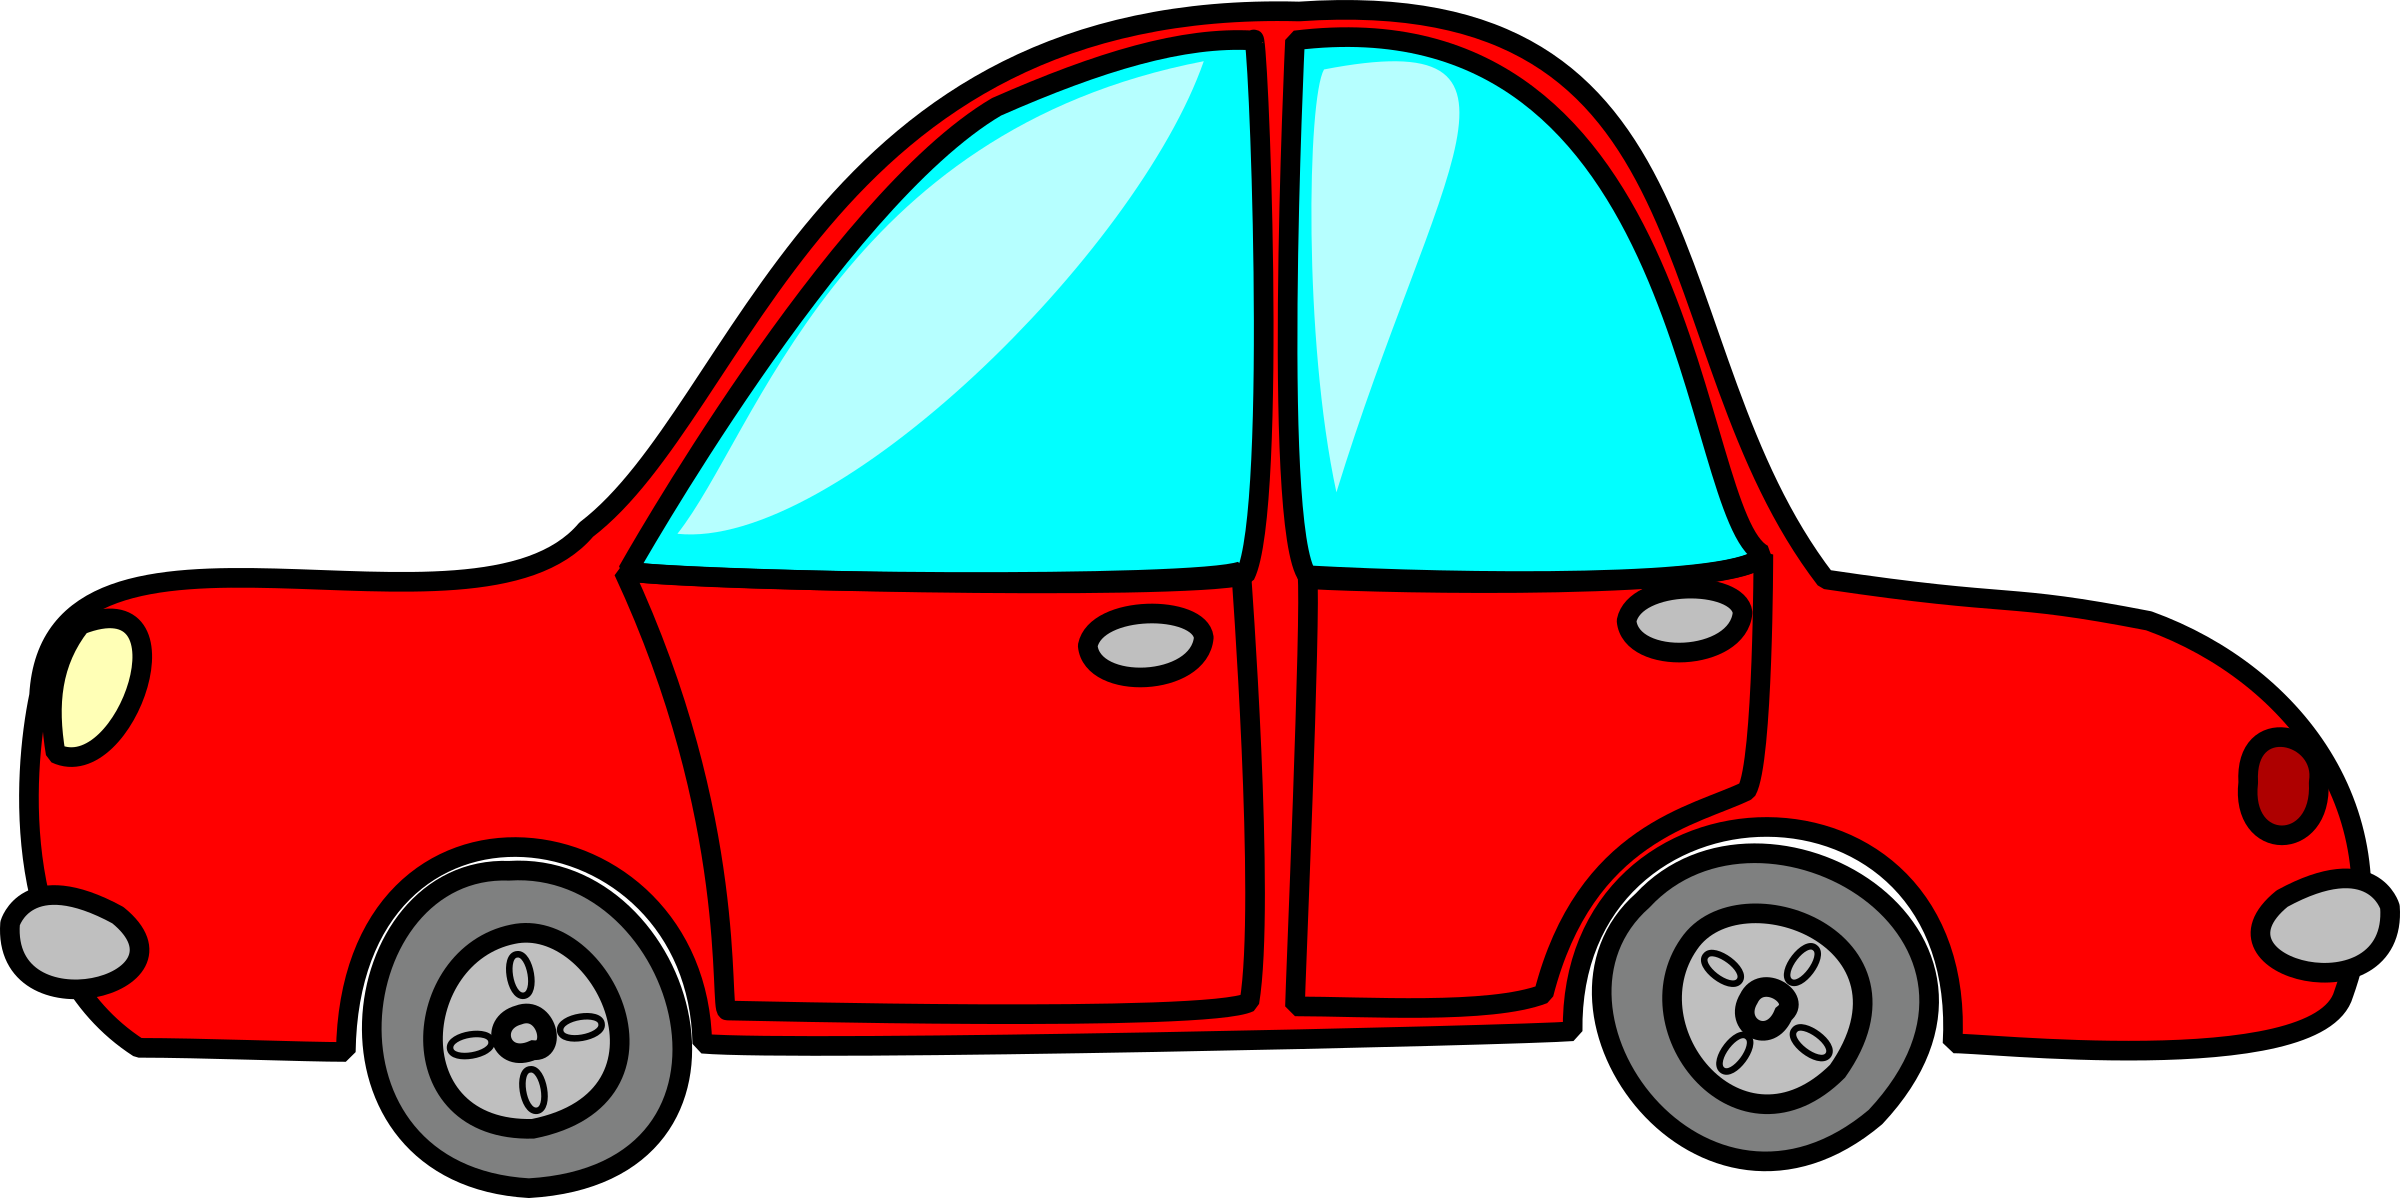 Cartoon Toy Car - ClipArt Best